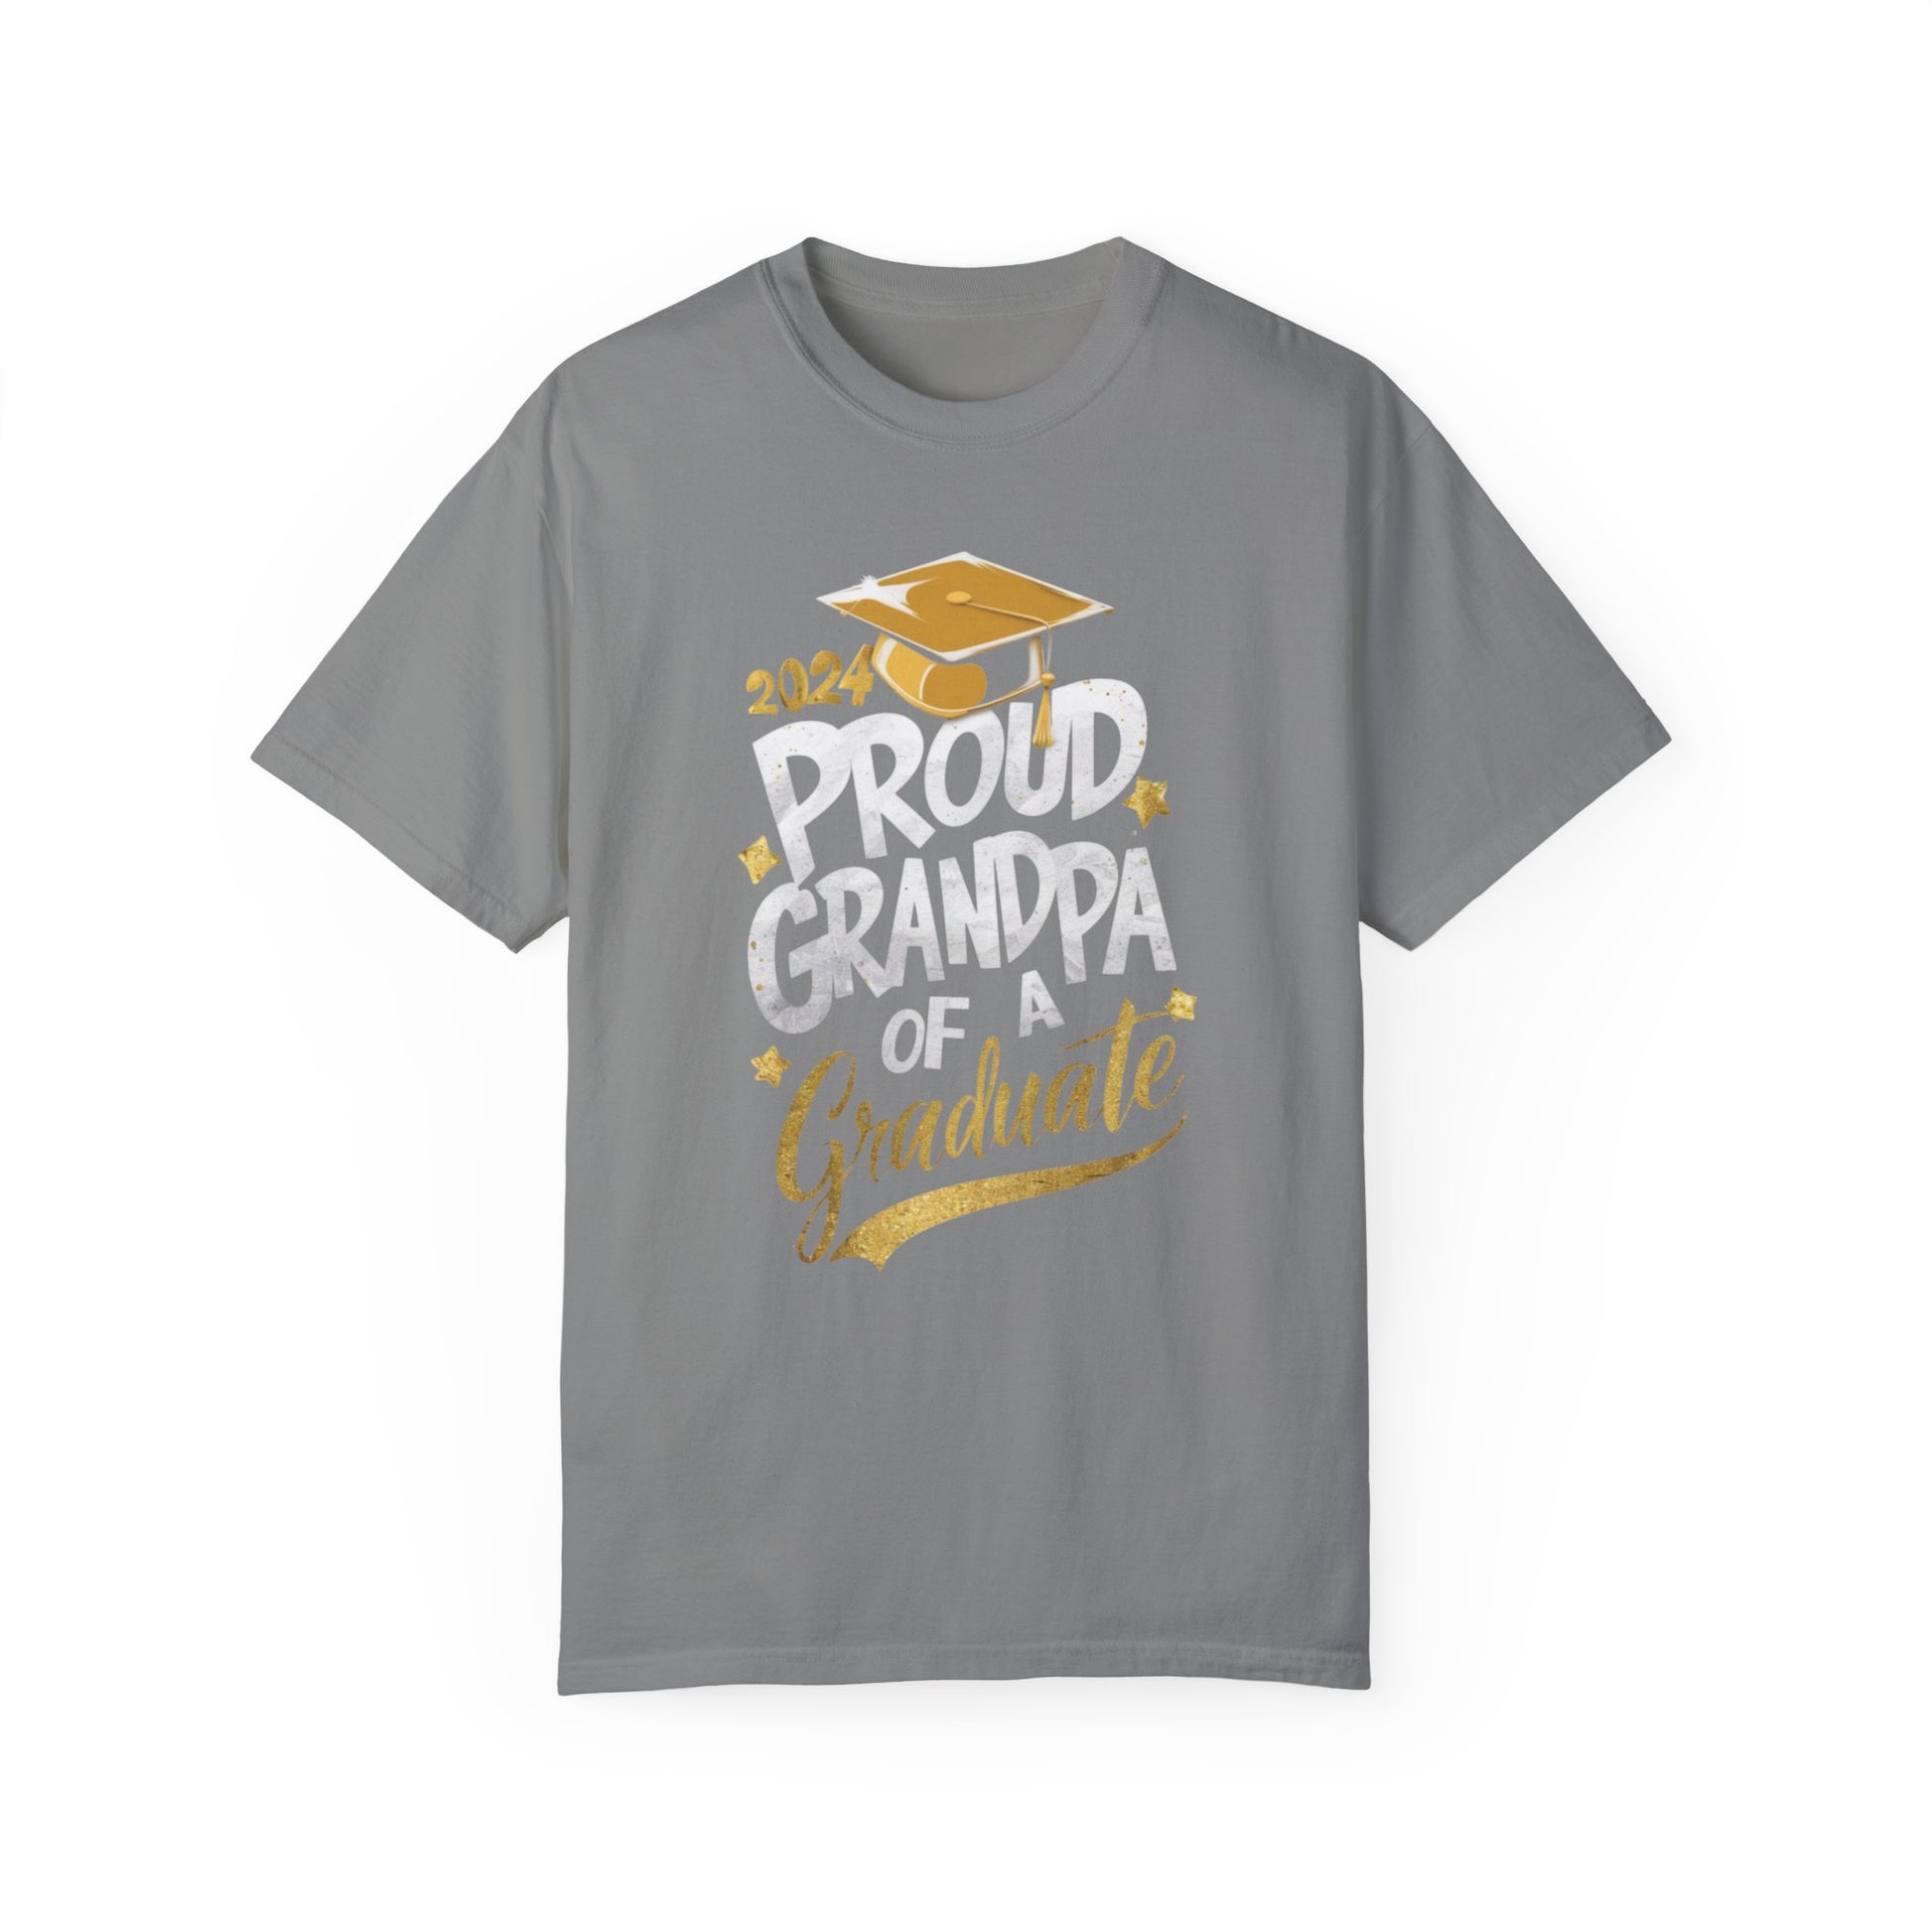 Proud Grandpa of a 2024 Graduate Unisex Garment-dyed T-shirt Cotton Funny Humorous Graphic Soft Premium Unisex Men Women Granite T-shirt Birthday Gift-4